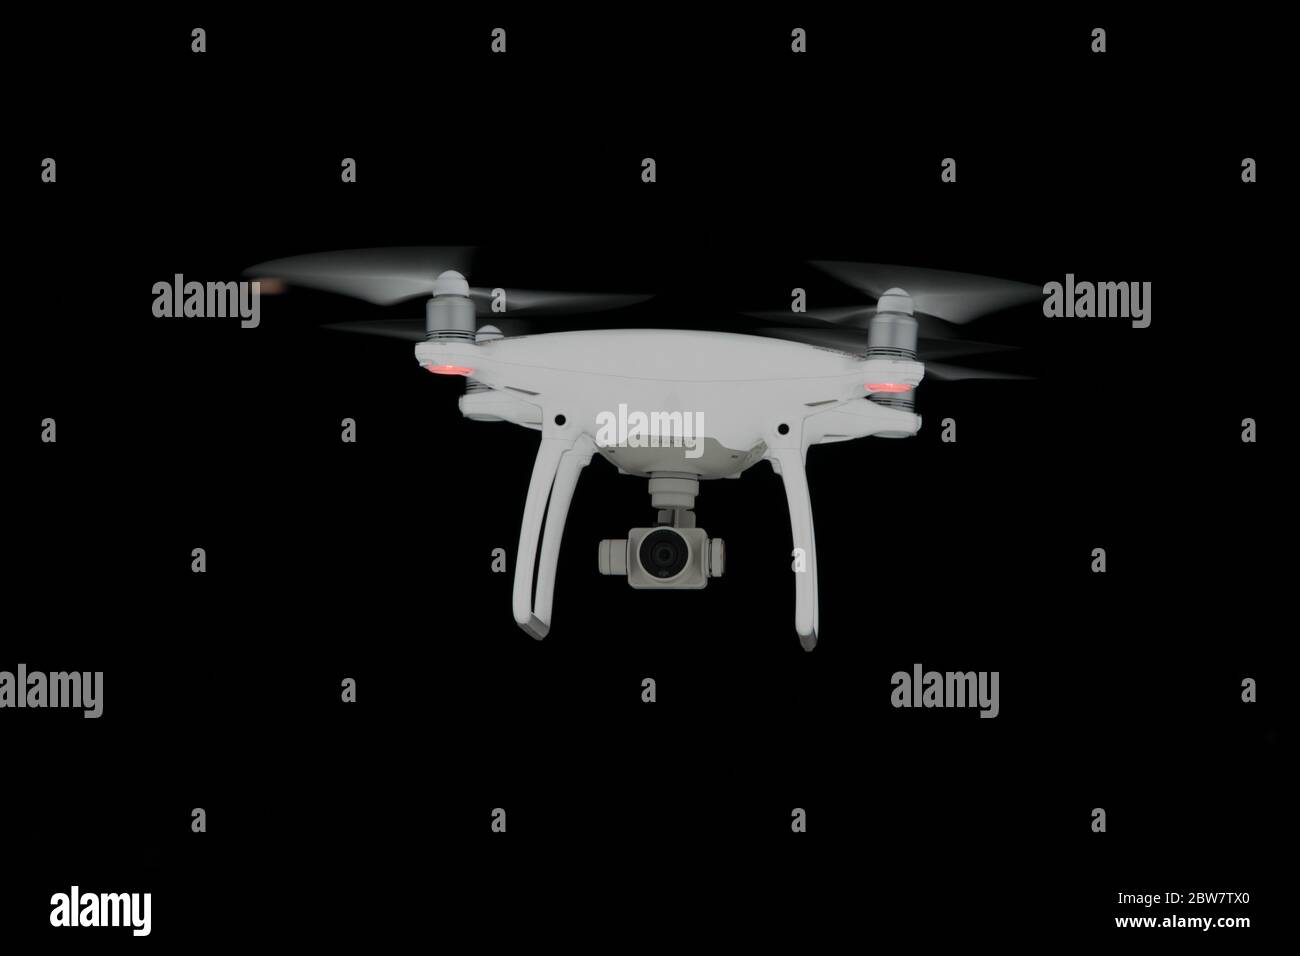 Drohne DJI Phantom 4 mit integrier, Gimbal-gelagerter Kamera fliegt Nachts in der Luft - Flugdrohne Foto de stock